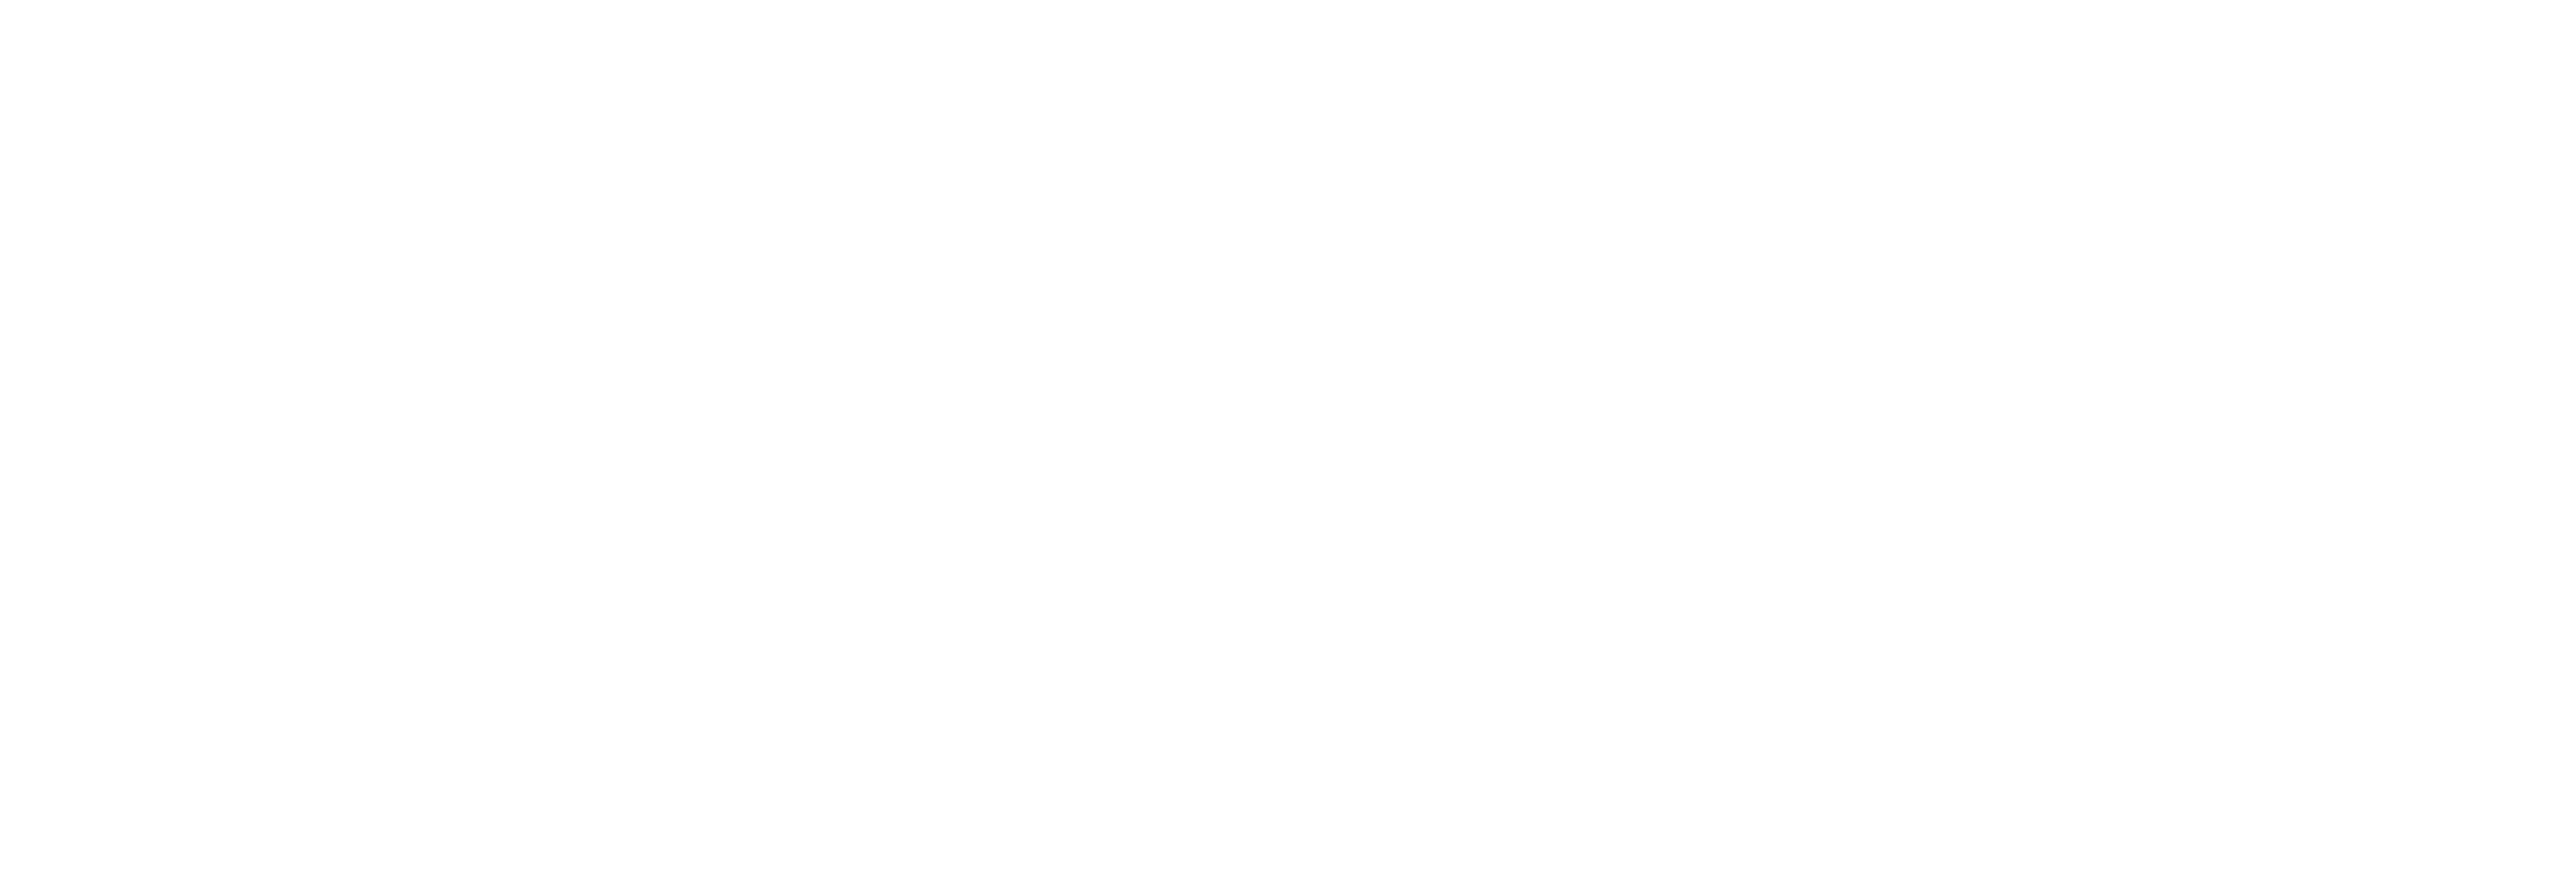 Mortgage Loan Deals